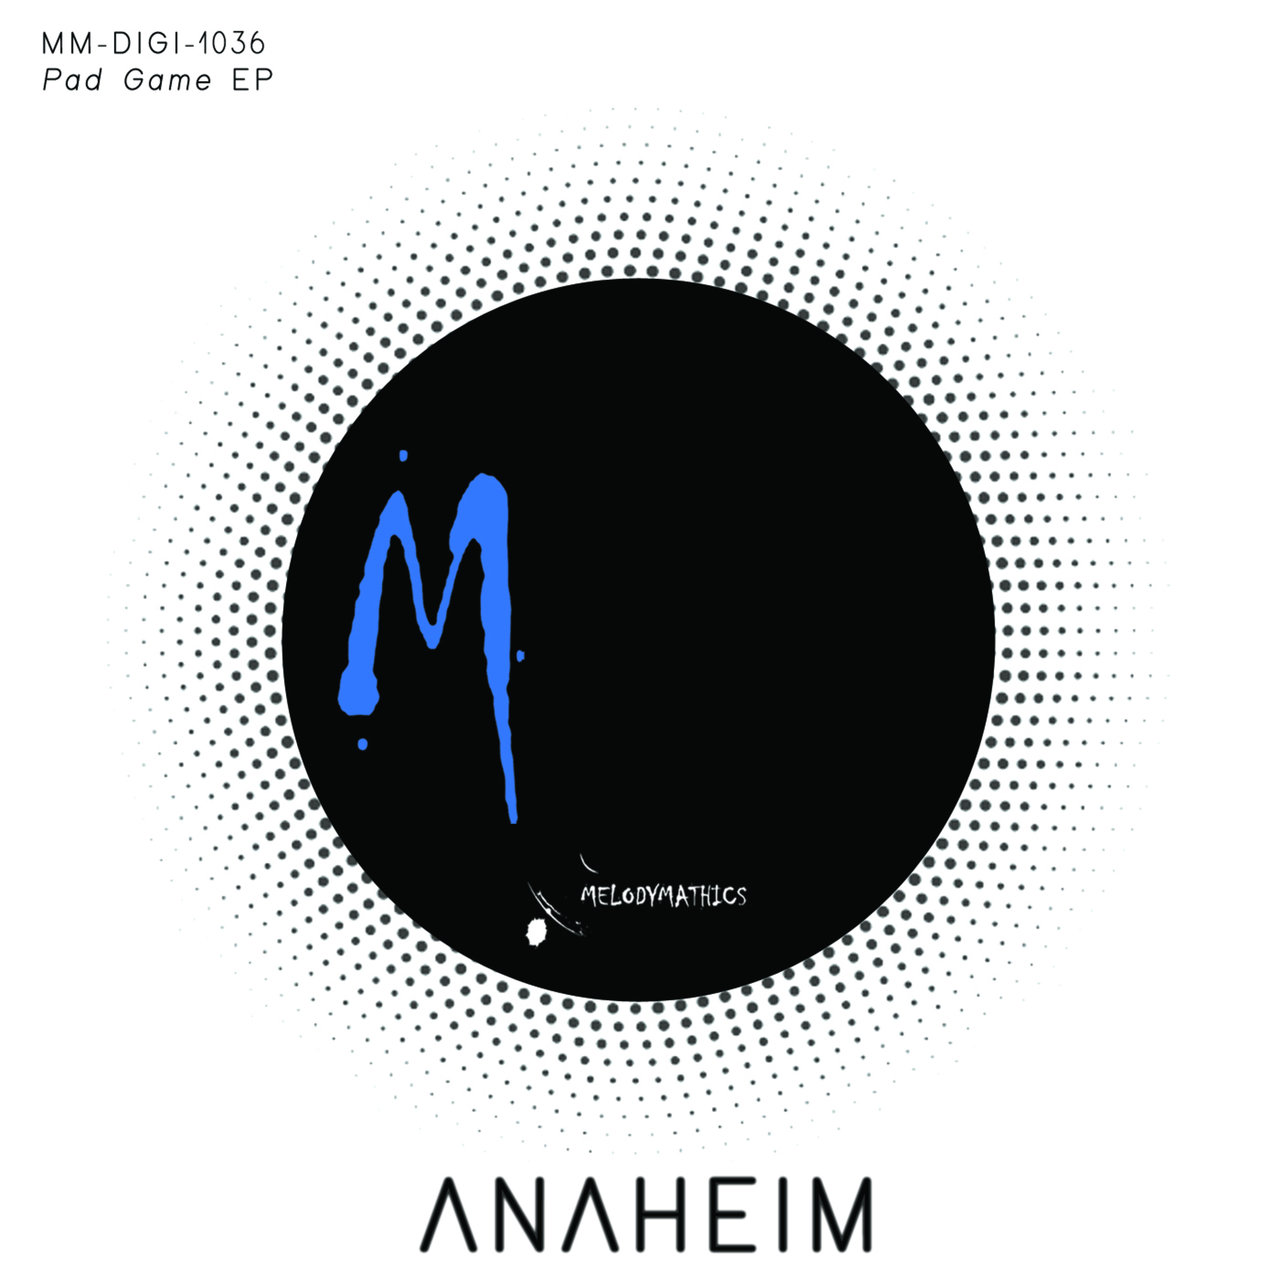 Anaheim - Pad Game EP / Melodymathics